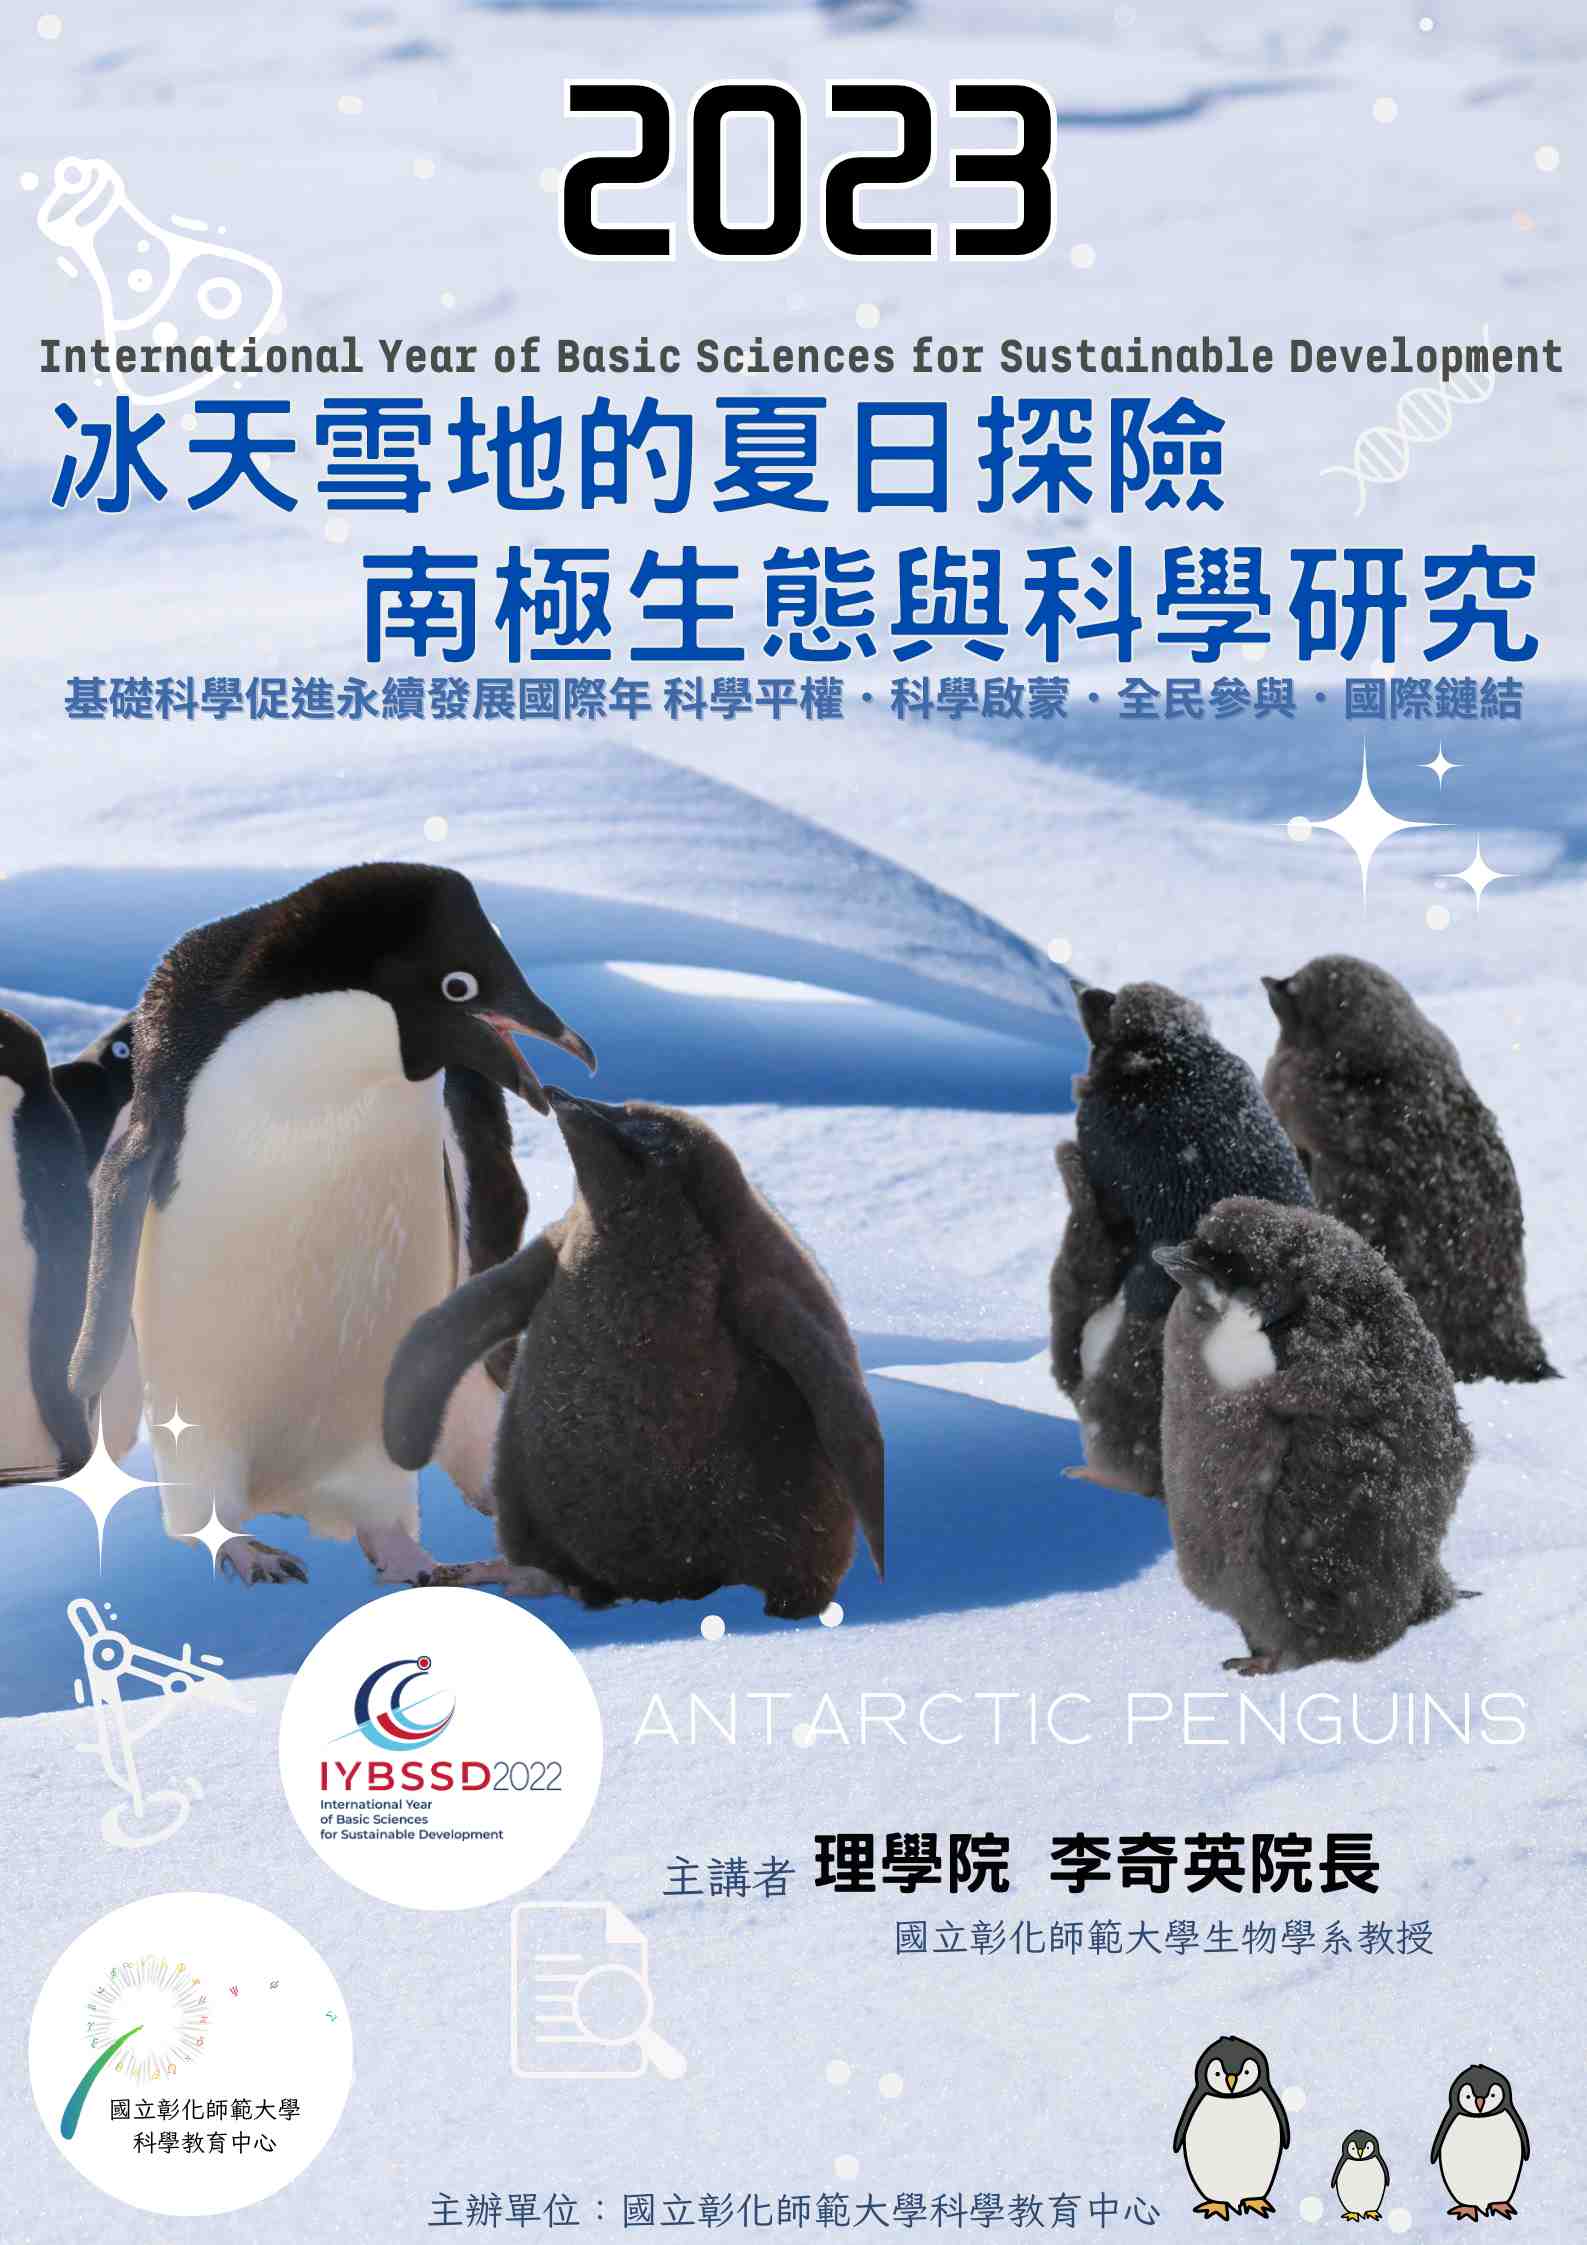 冰天雪地的夏日探險: 南極生態與科學研究 Promotional Graphics or Posters